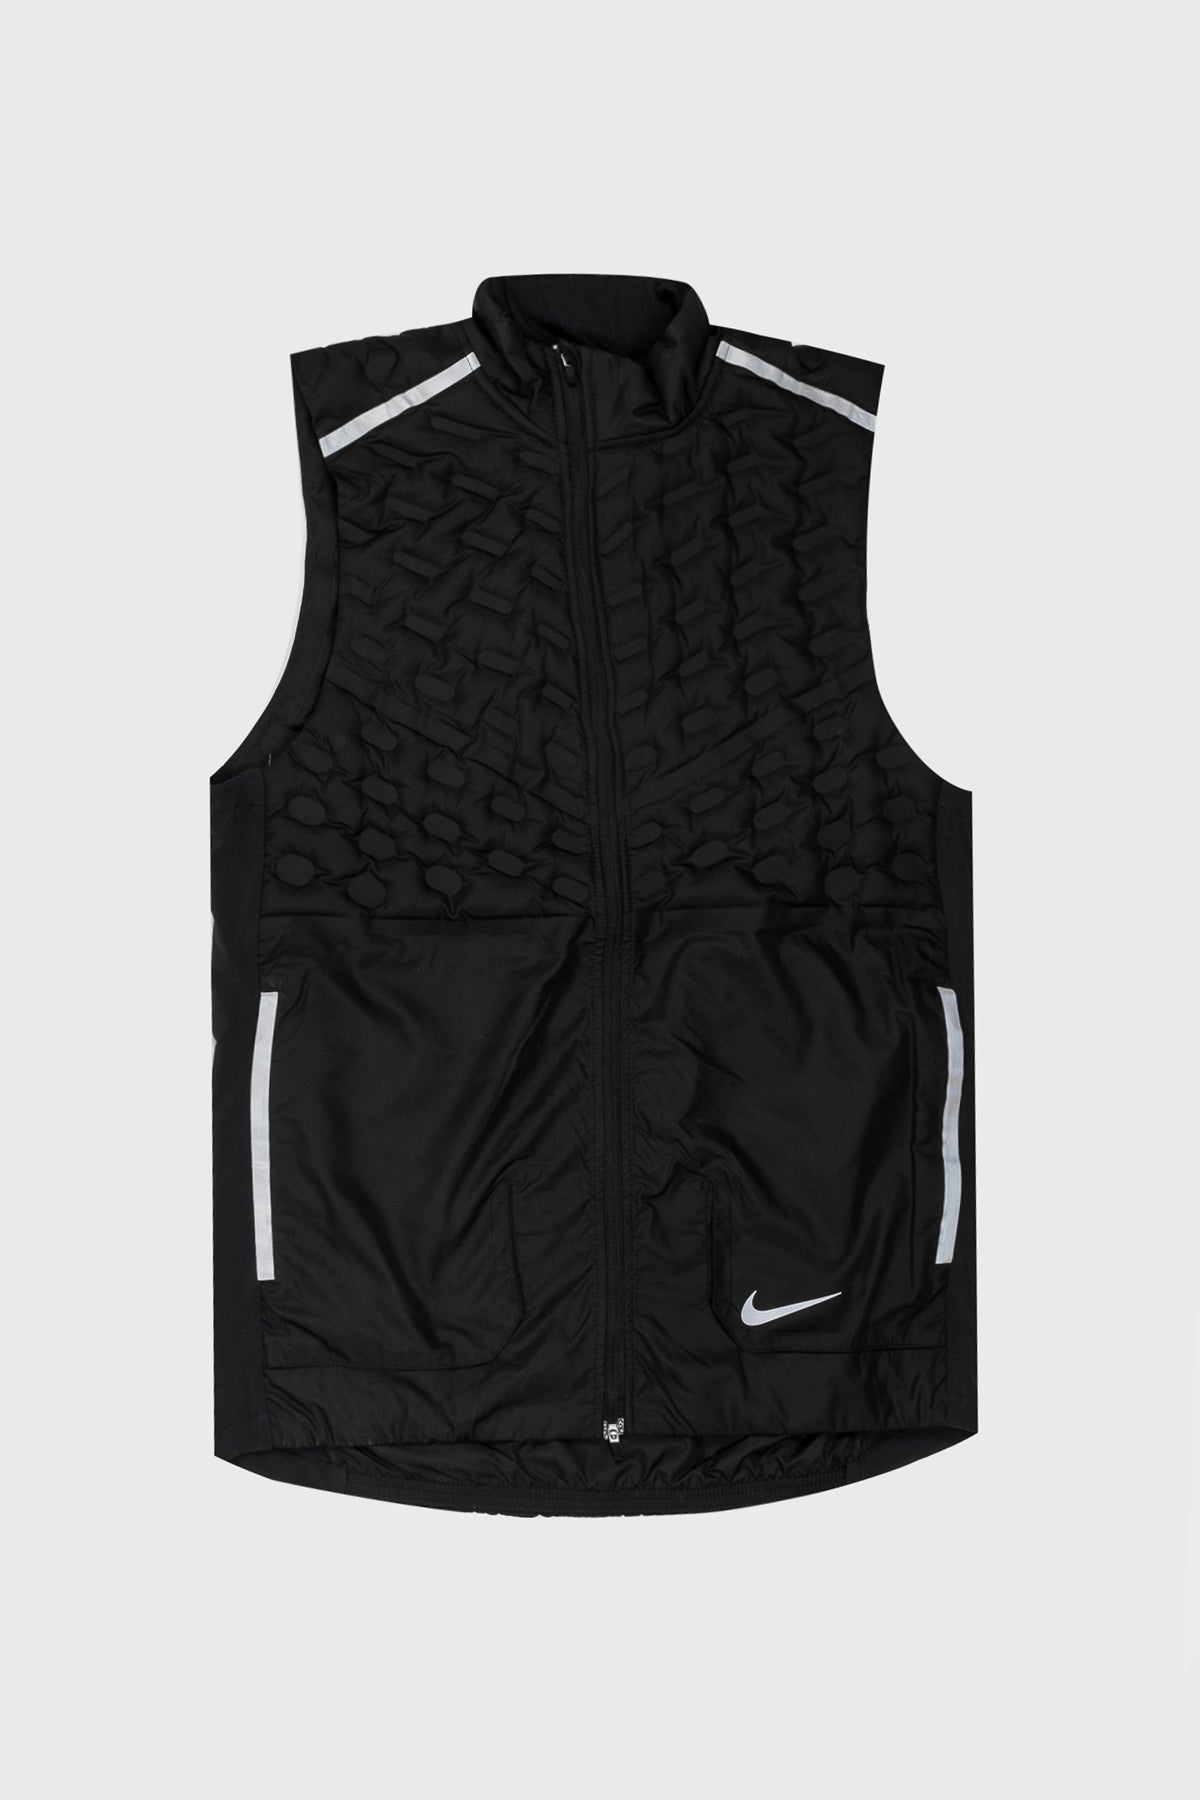 Nike - Men's Running Vest Nike AeroLoft - DISTANCE